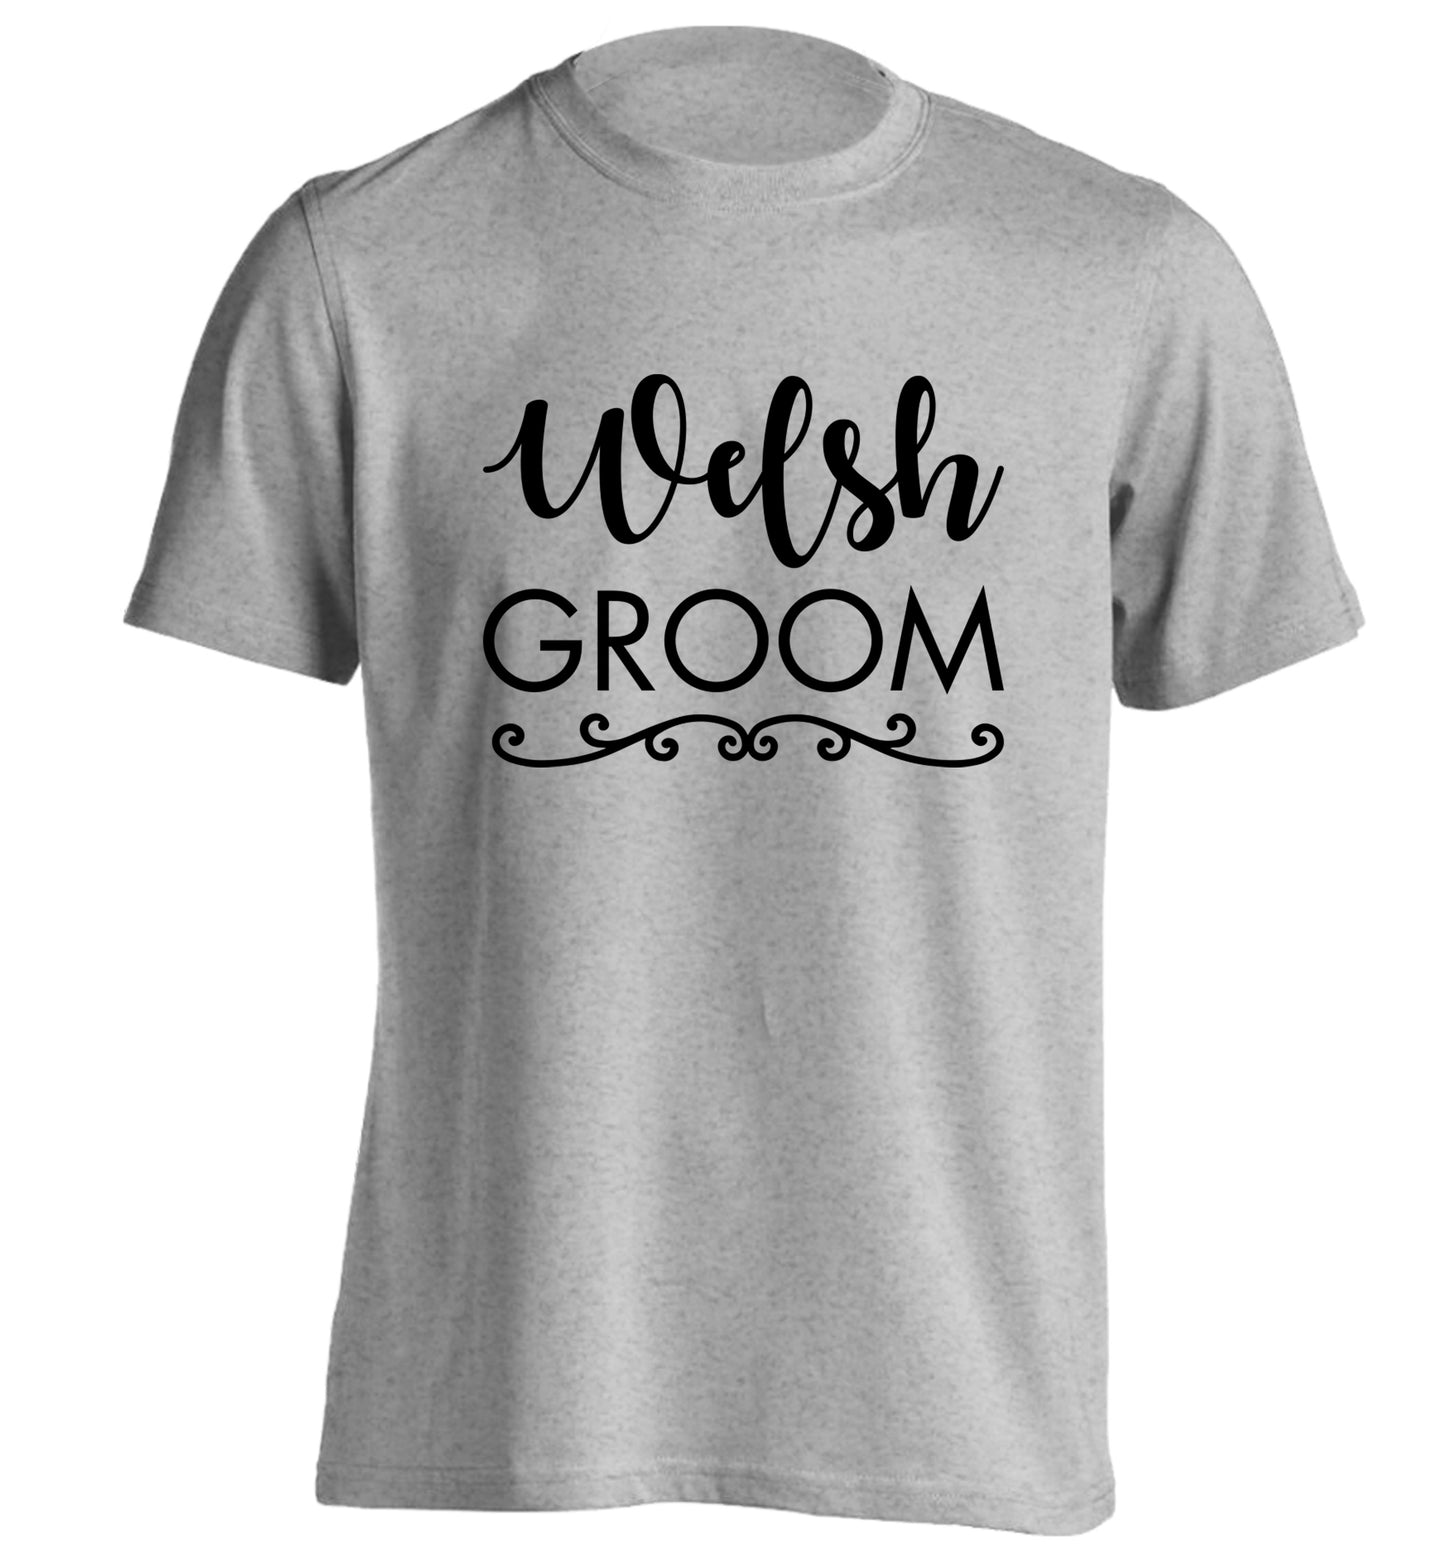 Welsh groom adults unisex grey Tshirt 2XL